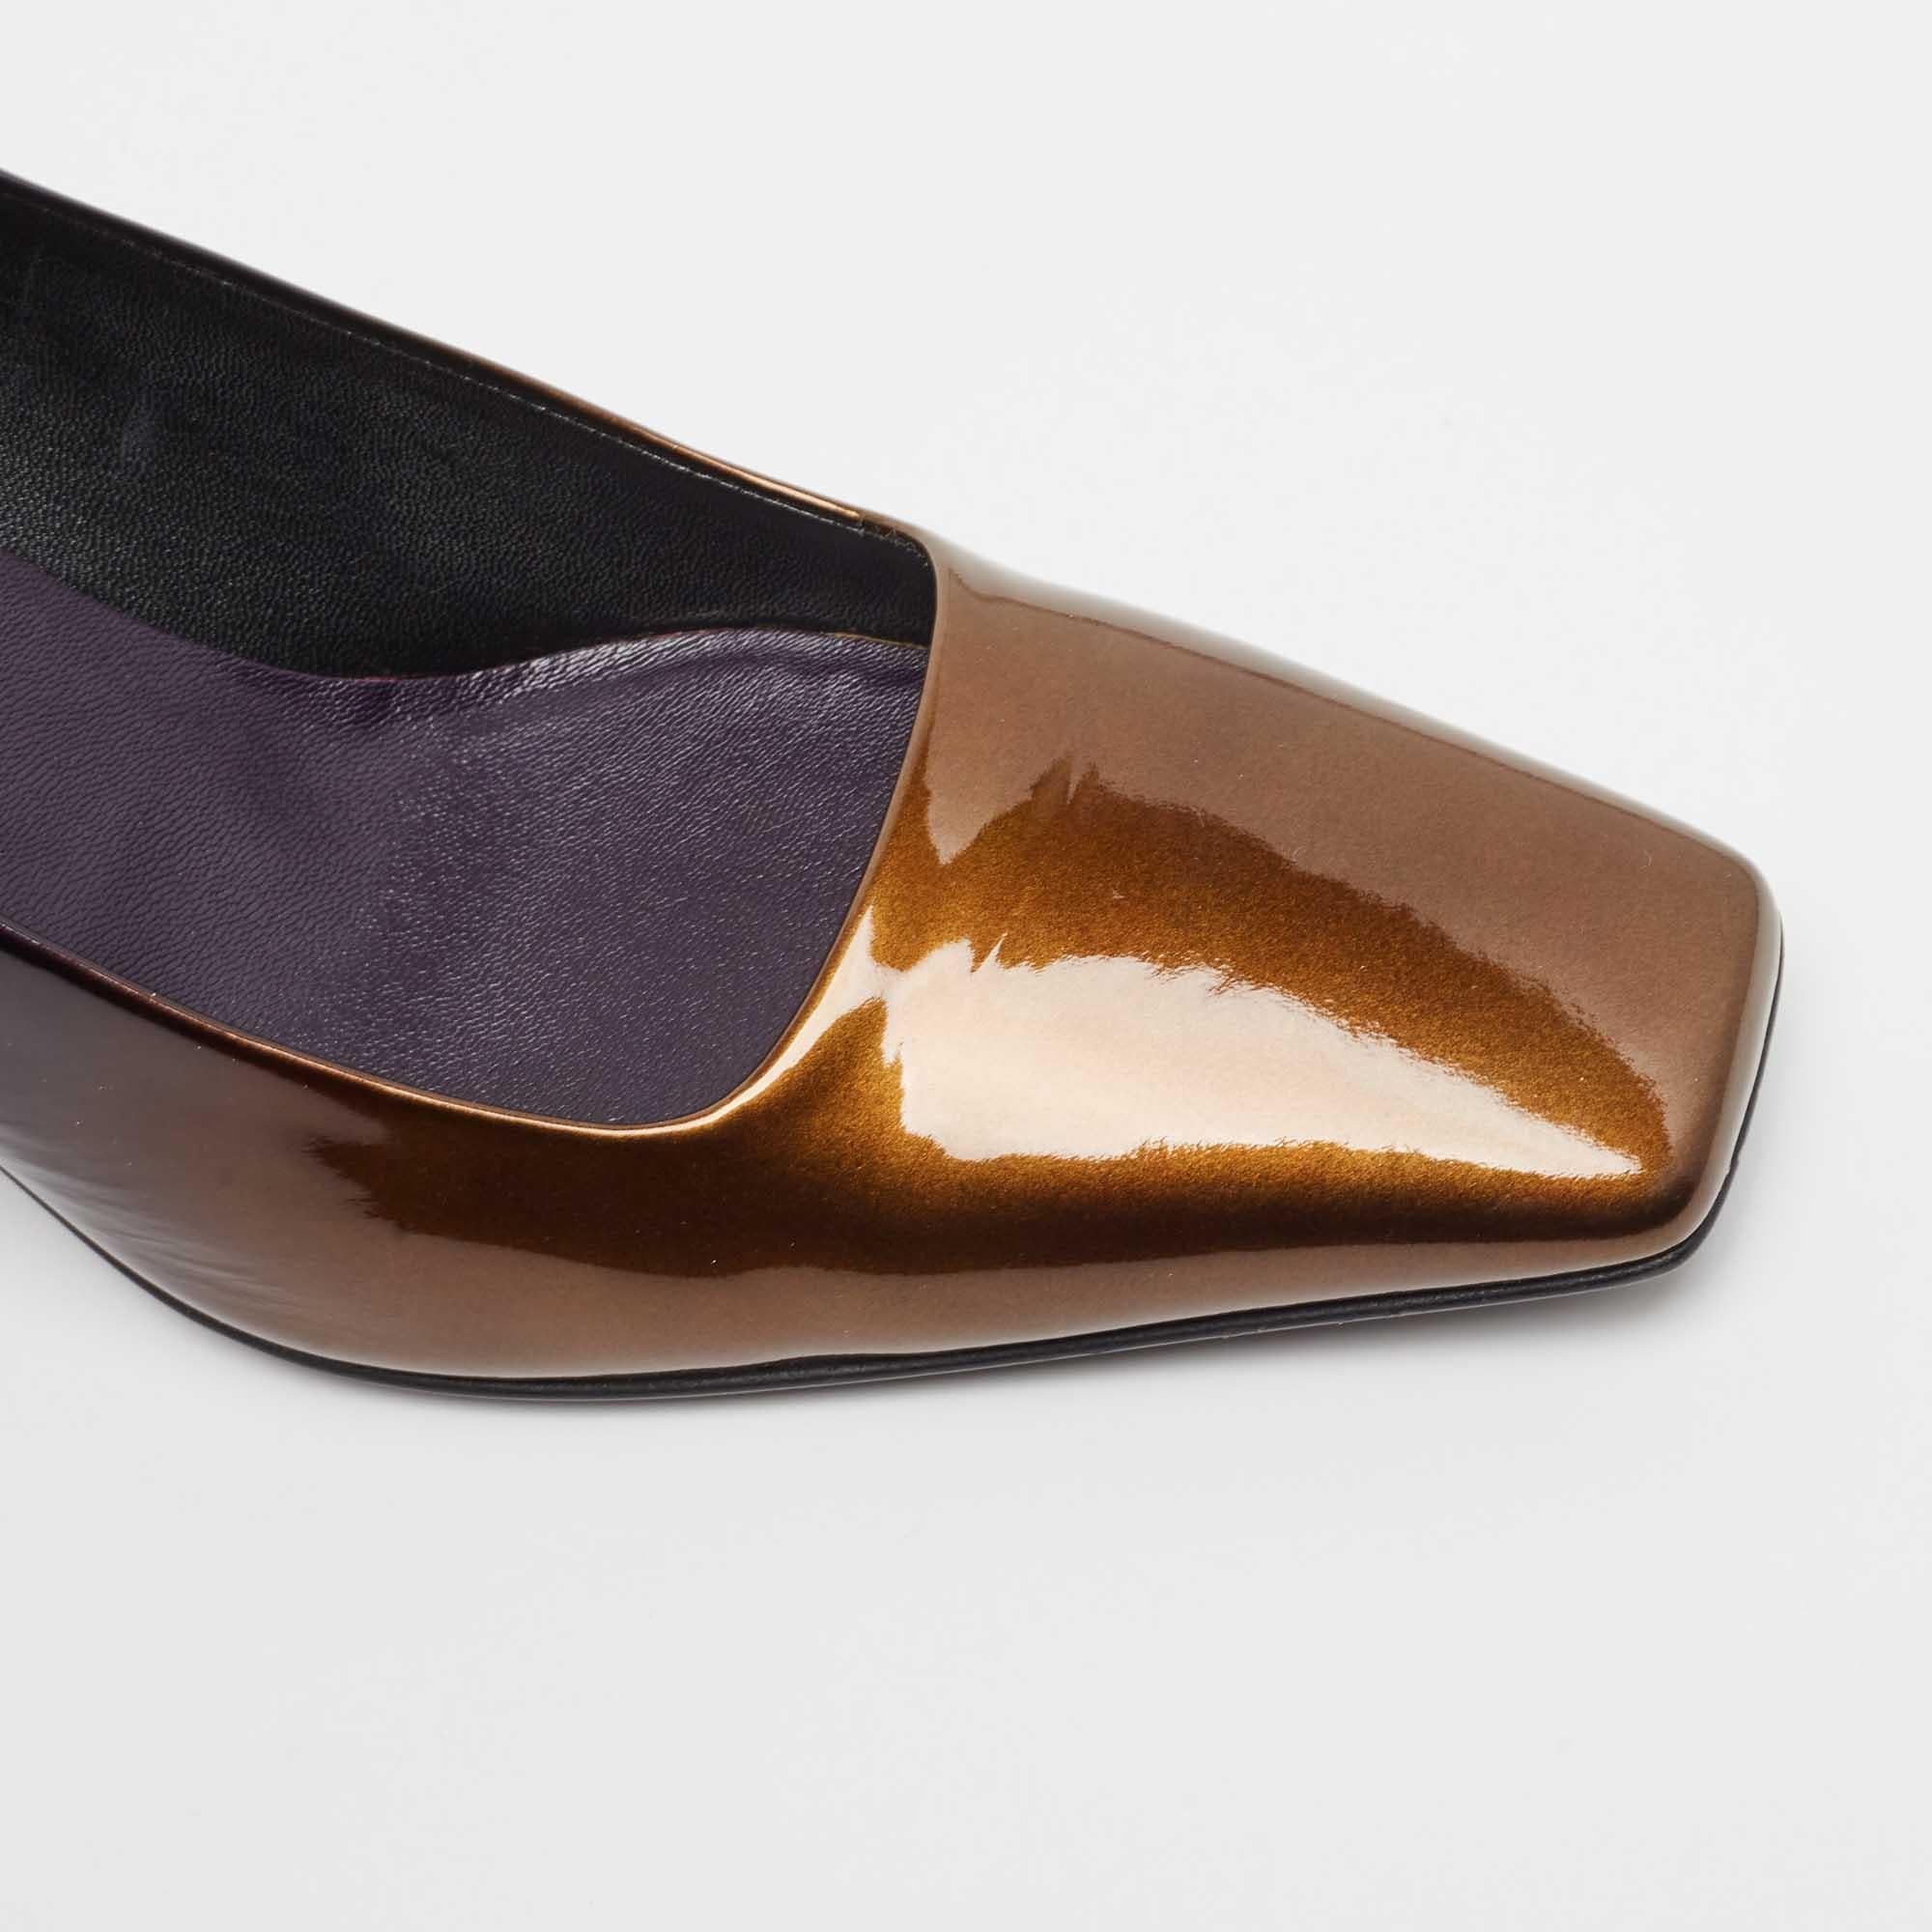 Prada Ombre Black/Brown Patent Leather Square Toe Pumps Size 37.5 1